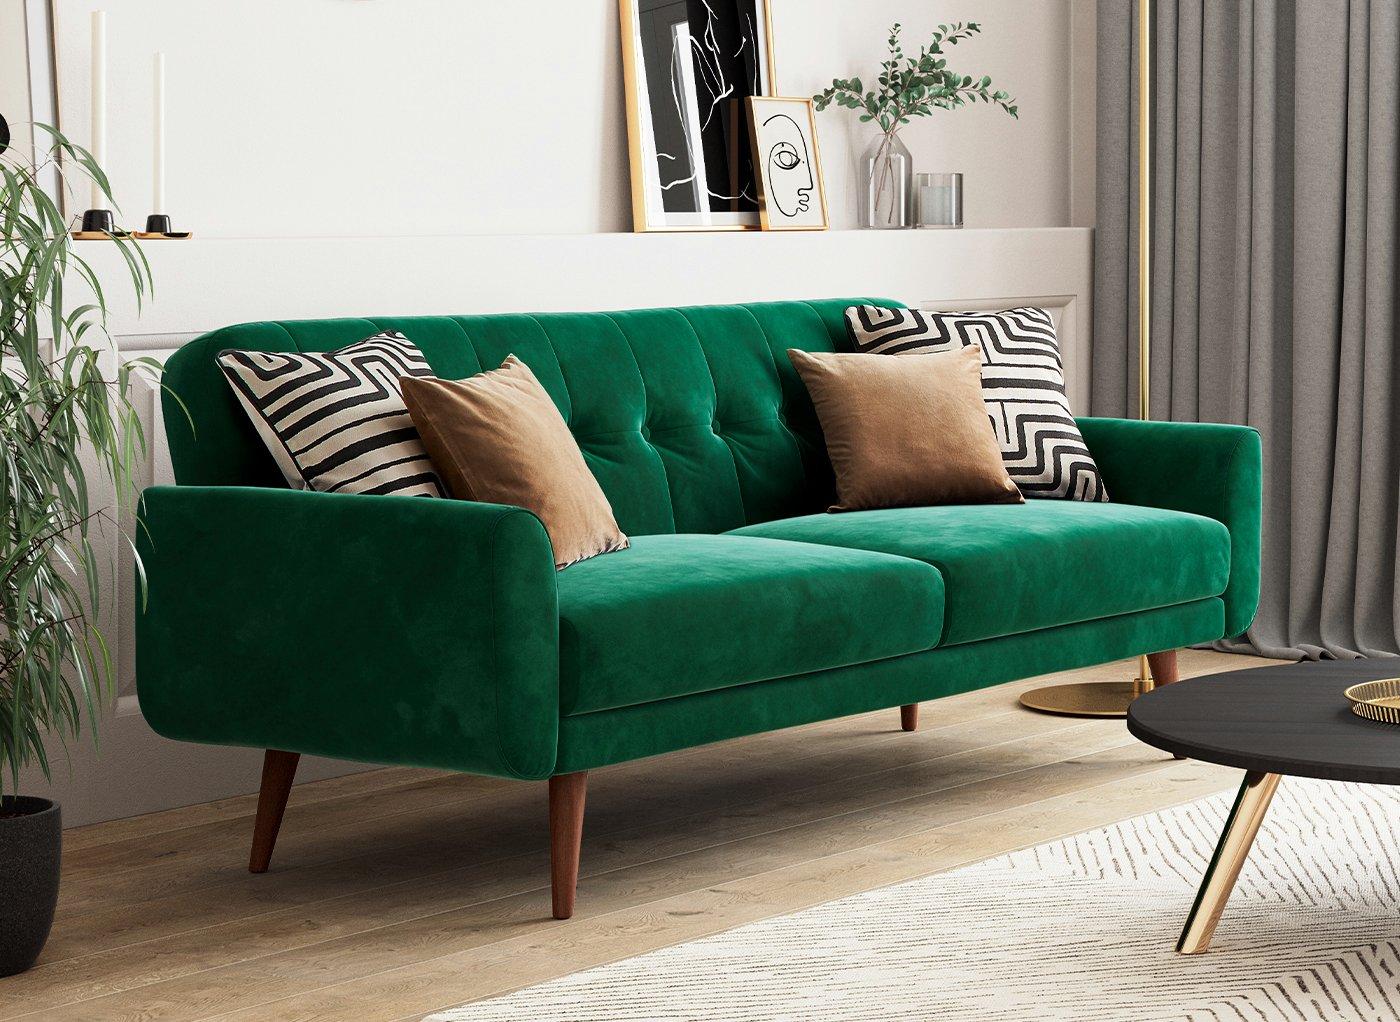 green sofa bed uk